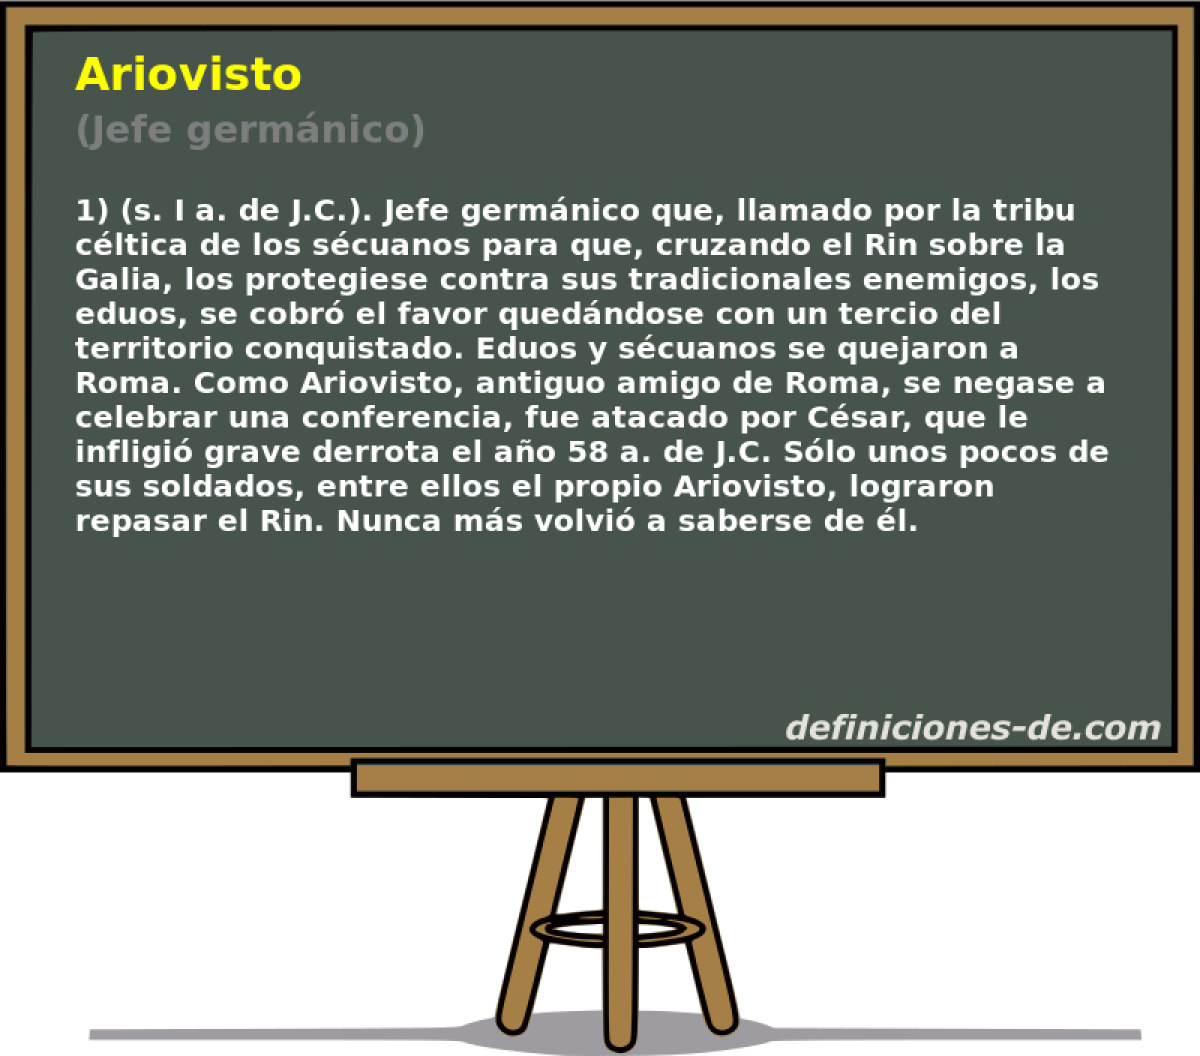 Ariovisto (Jefe germnico)